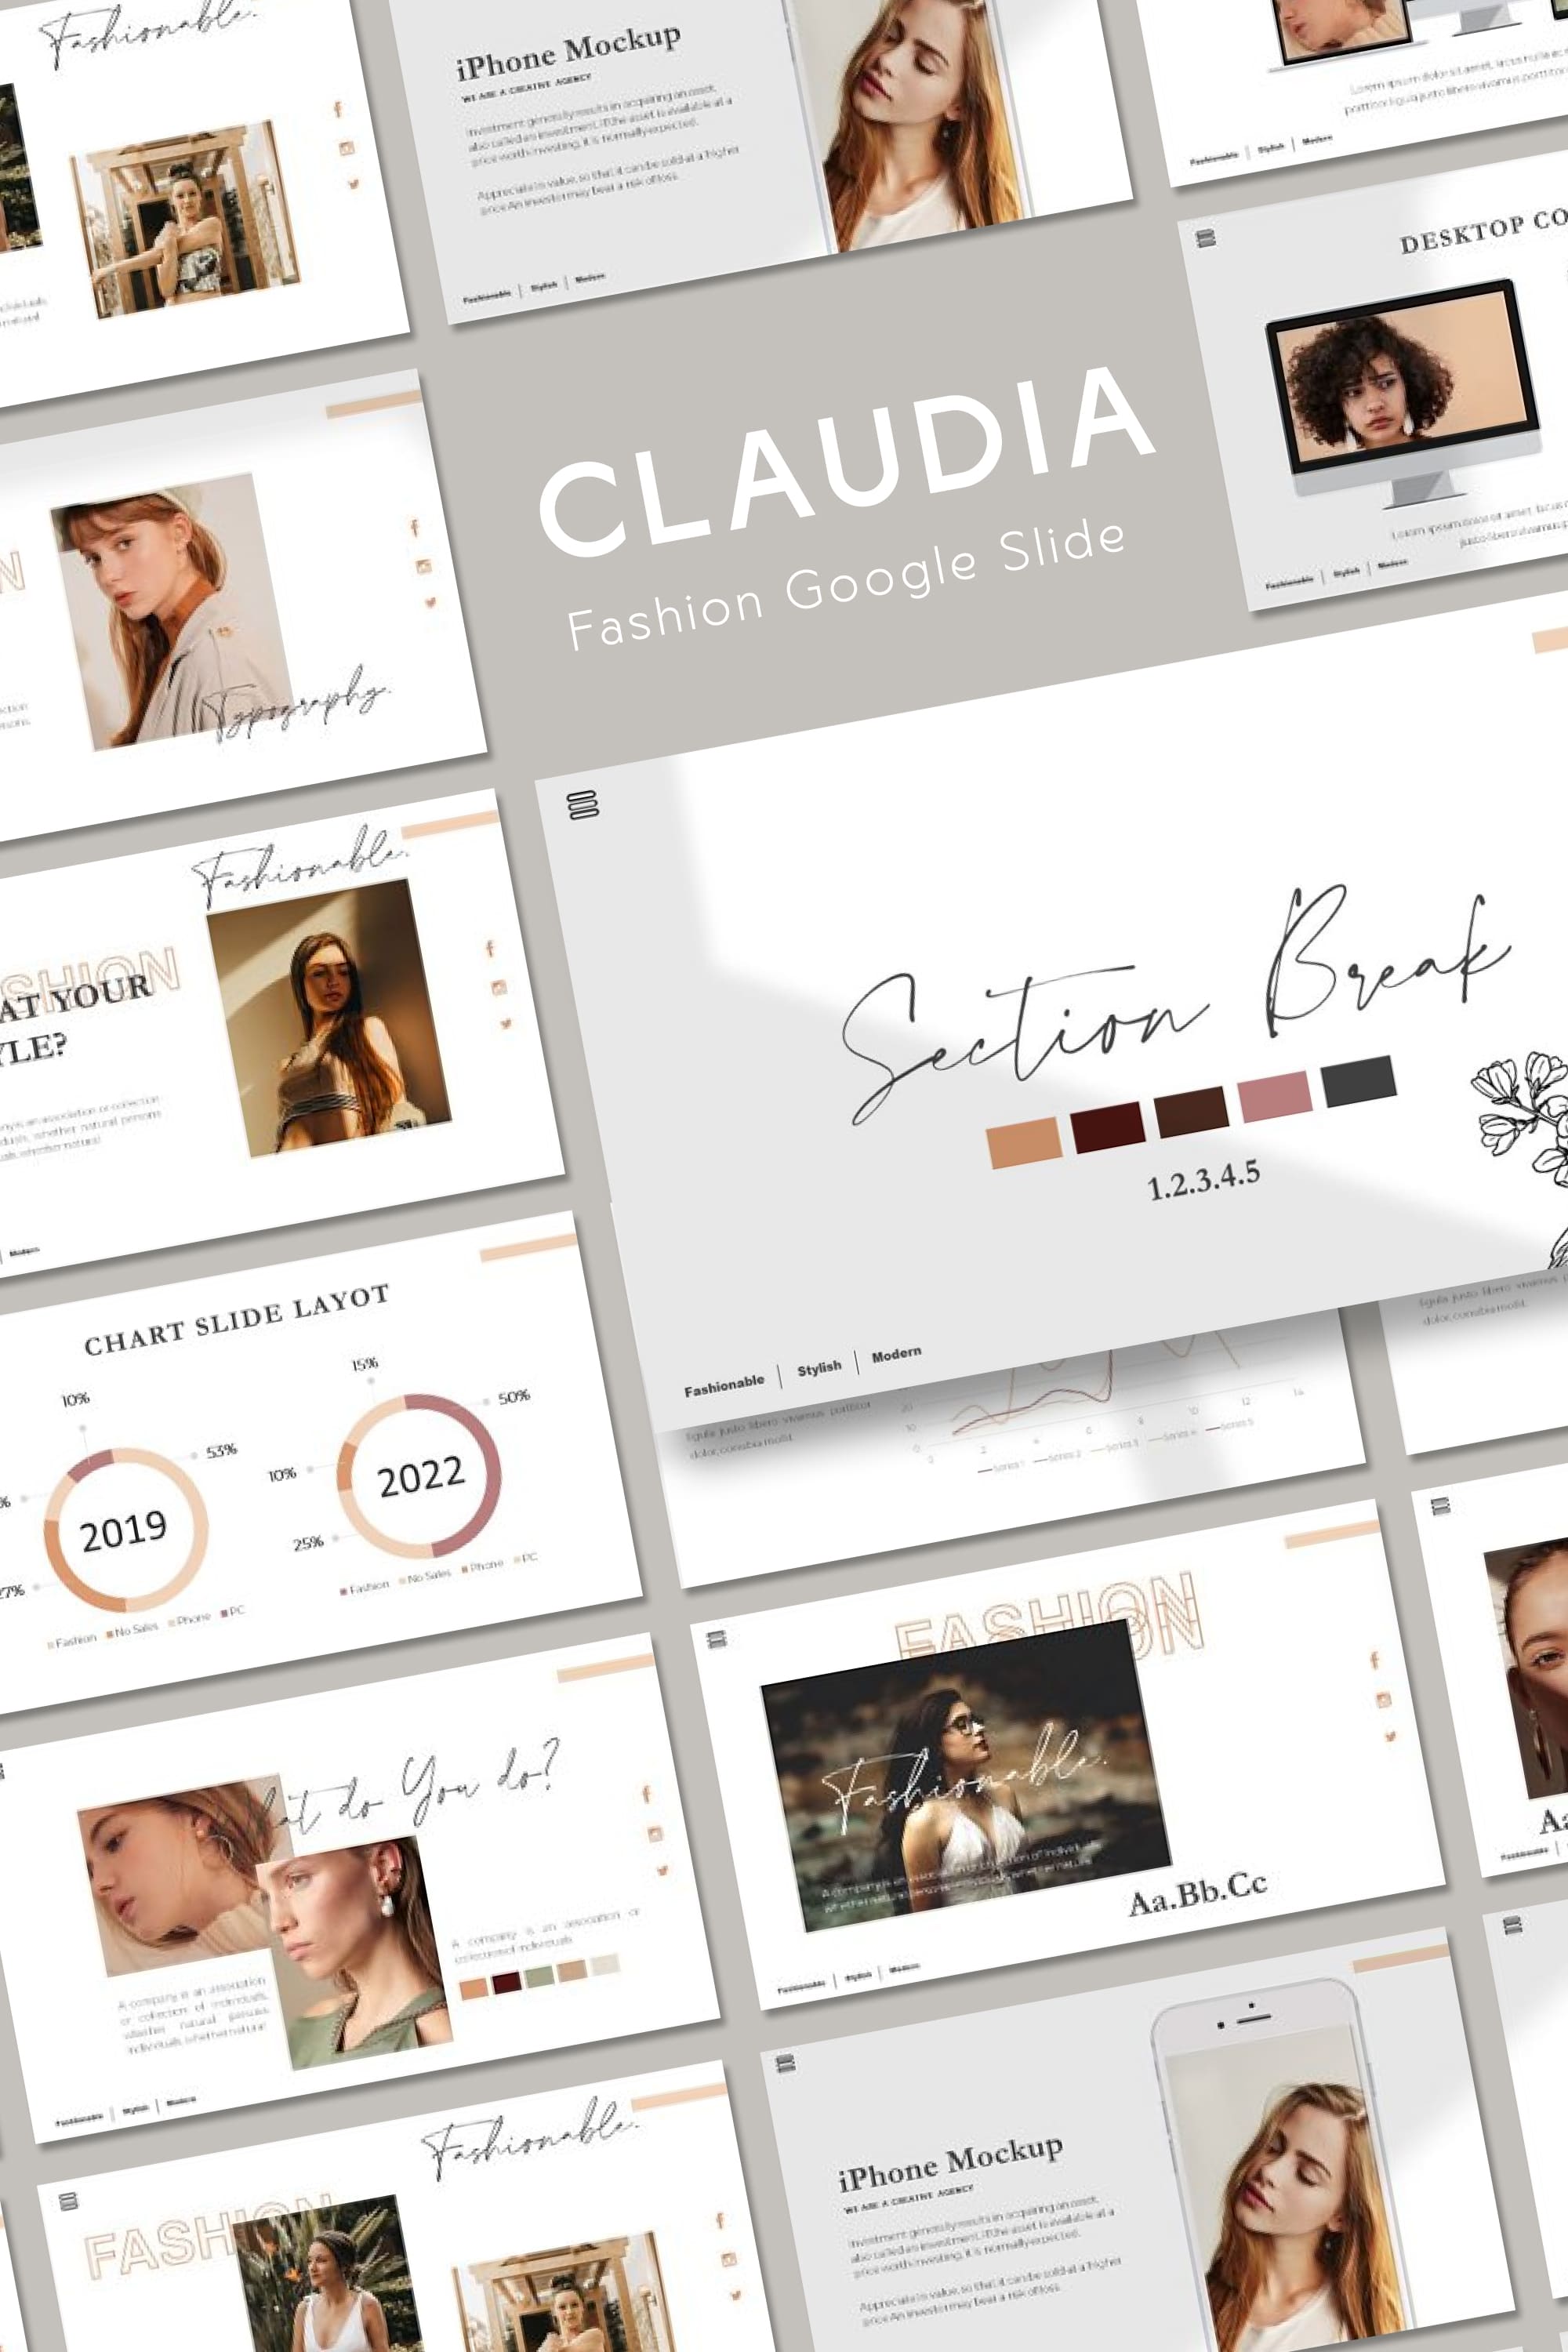 Claudia fashion google slide - pinterest image preview.